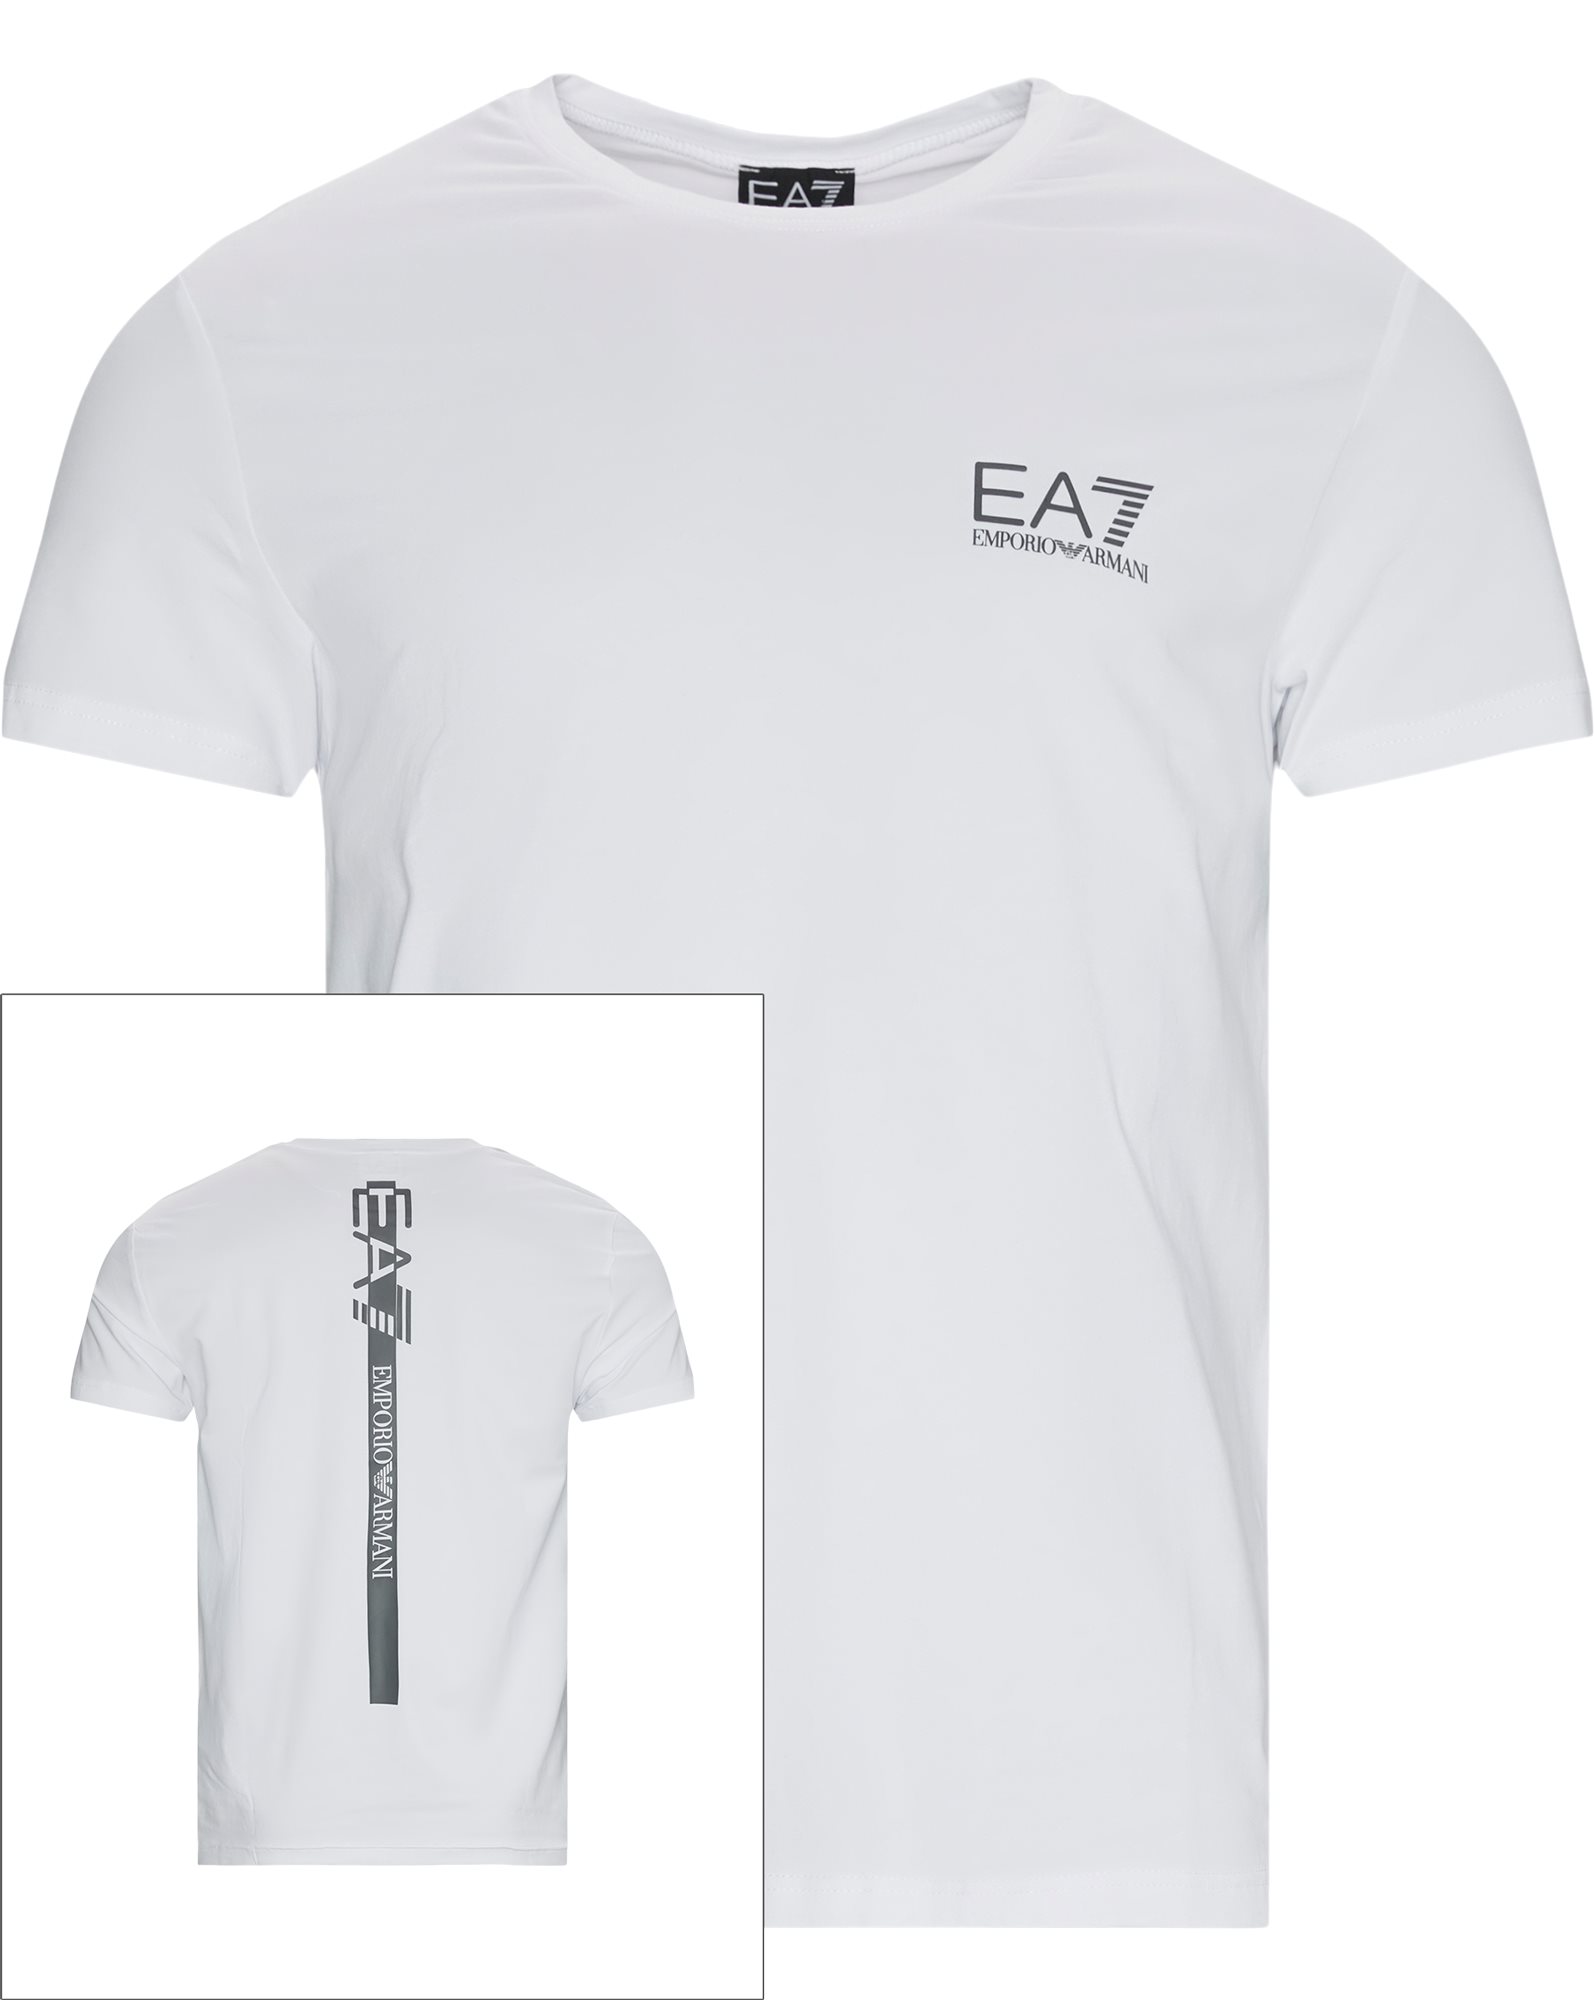 Pj03z-3kpt06 Tee - T-shirts - Regular fit - White